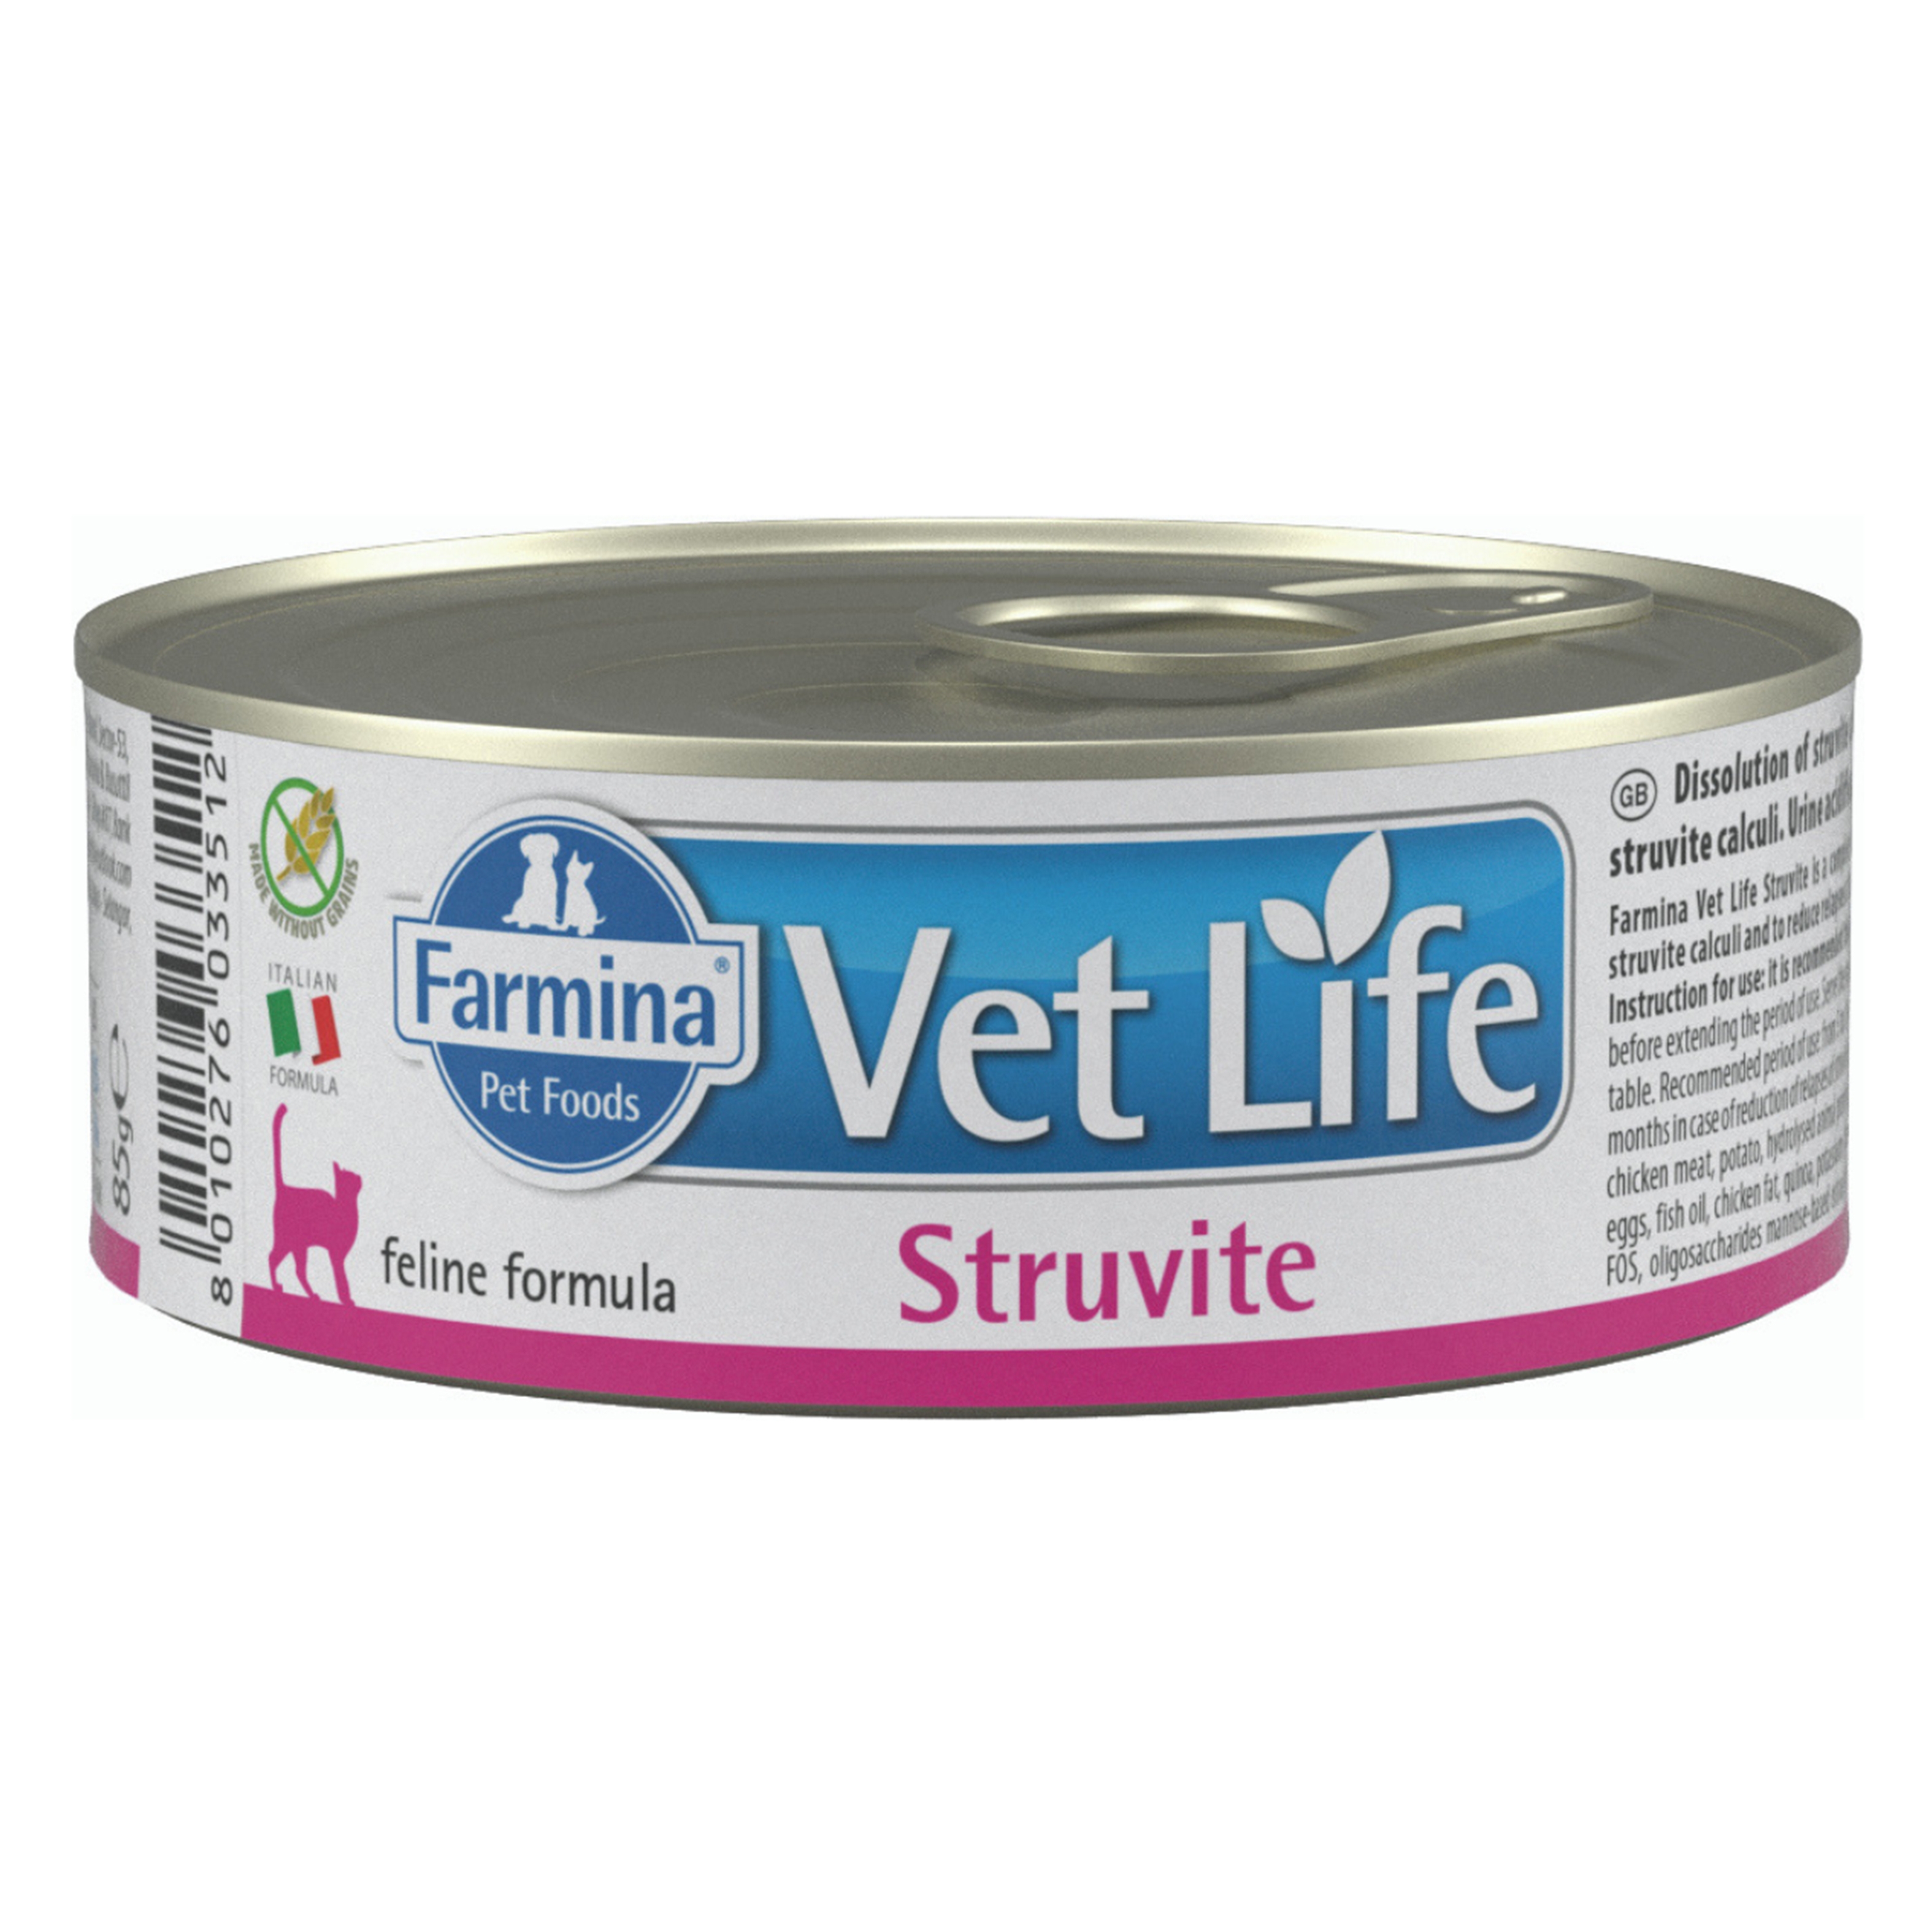 Vet Life Natural Diet Cat Struvite, 85 g petmart